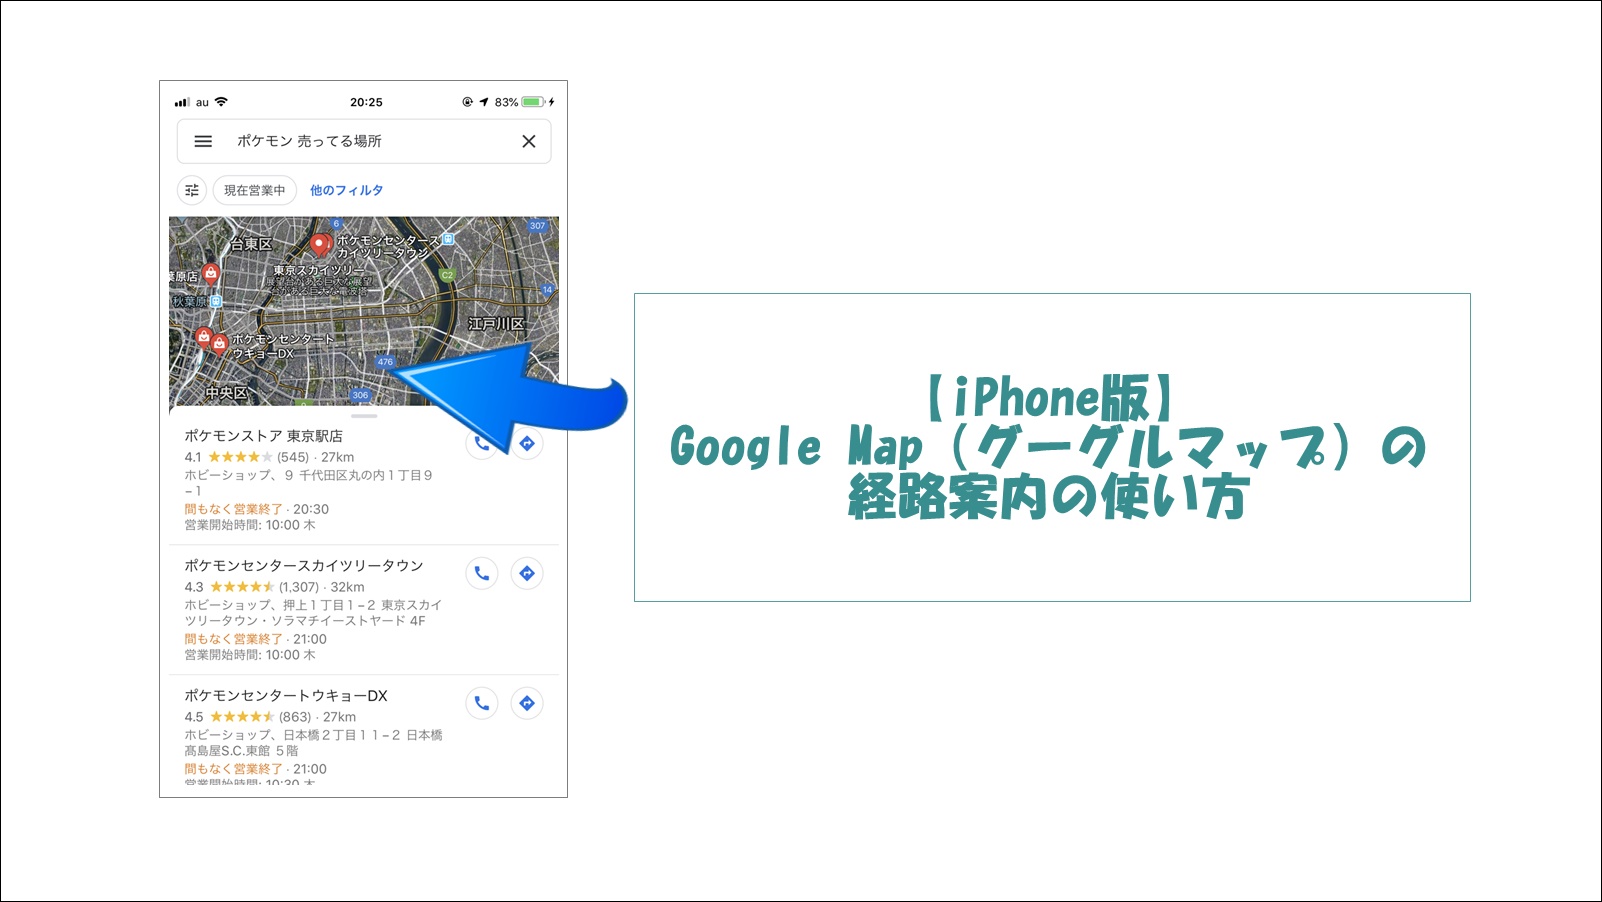 Iphone版 Google Map グーグルマップ の経路案内の使い方まとめ ブログ集客実践の書 株式会社snac